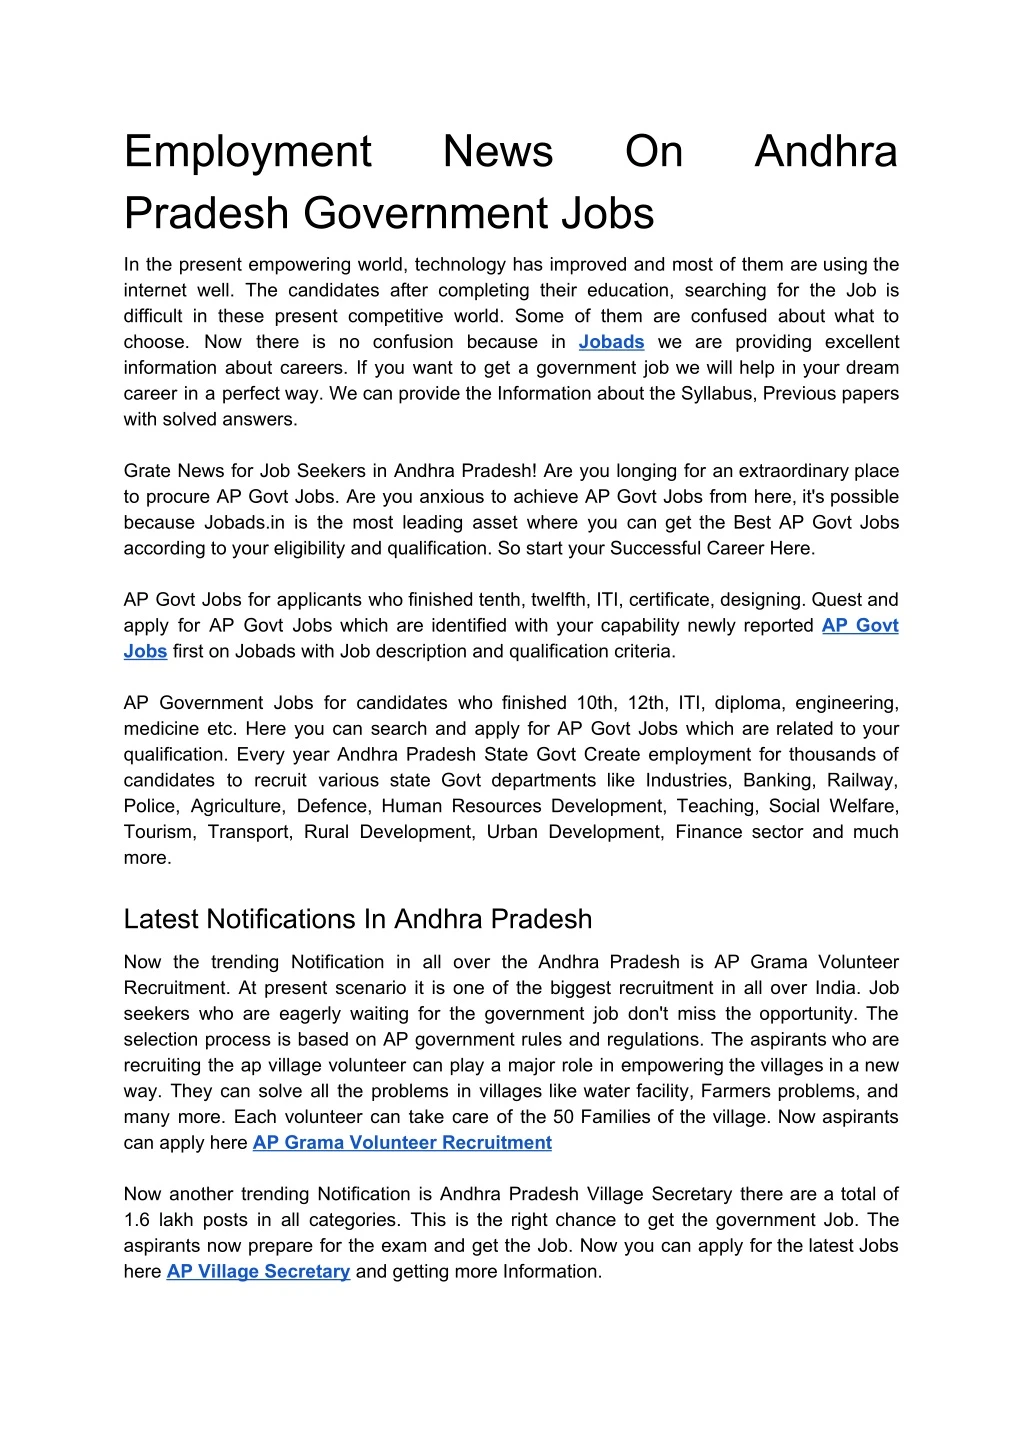 employment pradesh government jobs